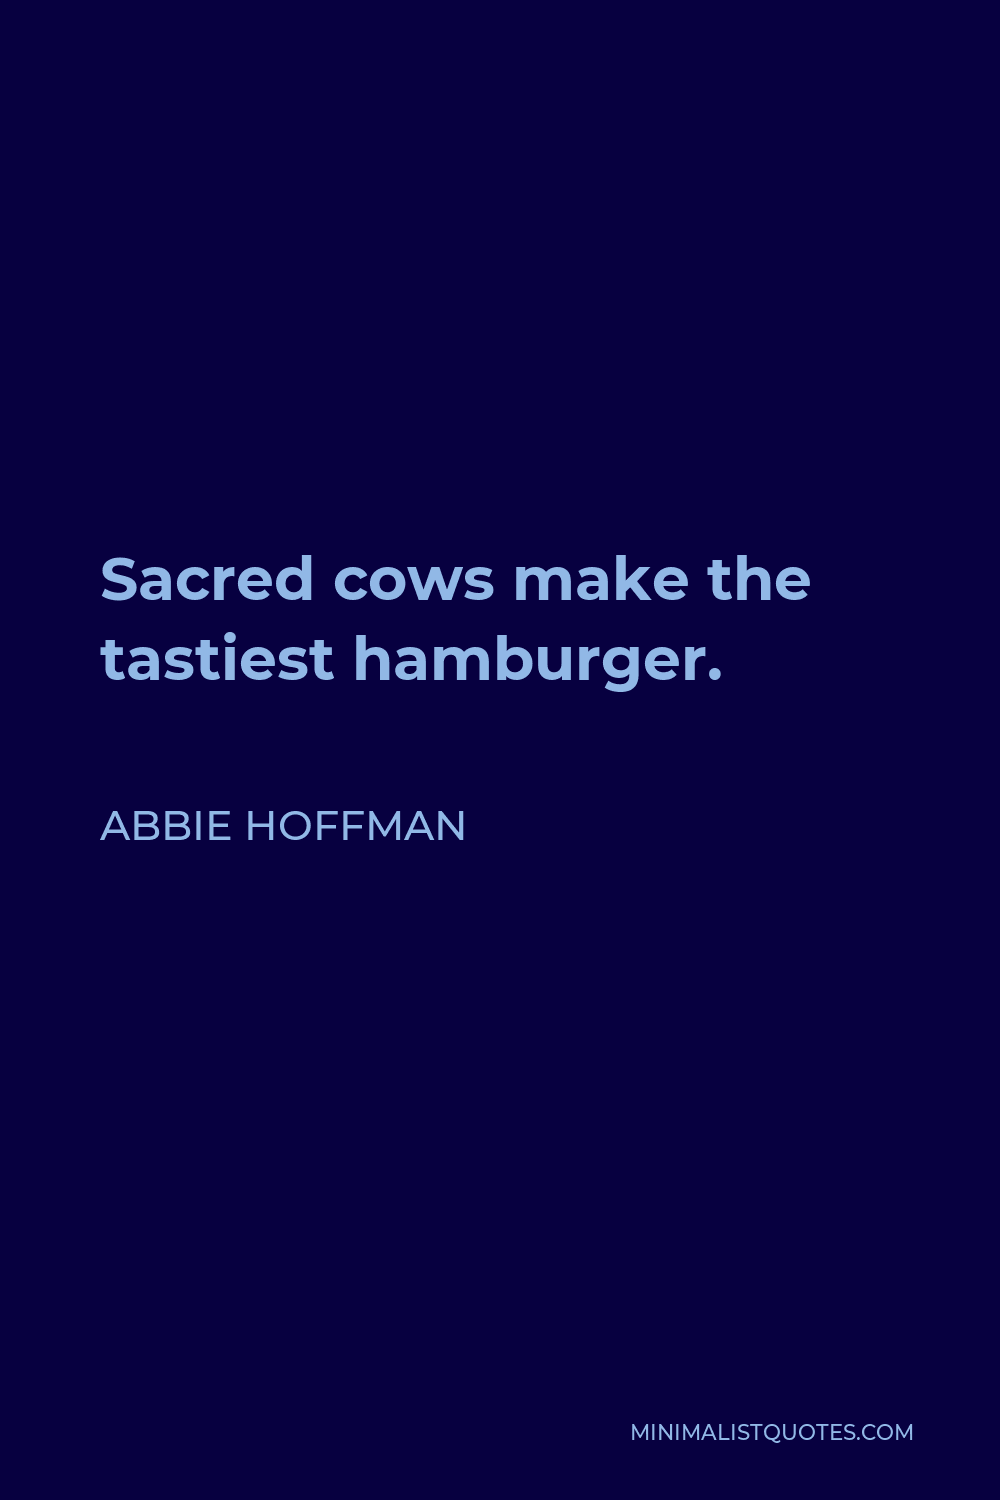 Abbie Hoffman Quote - Sacred cows make the tastiest hamburger.